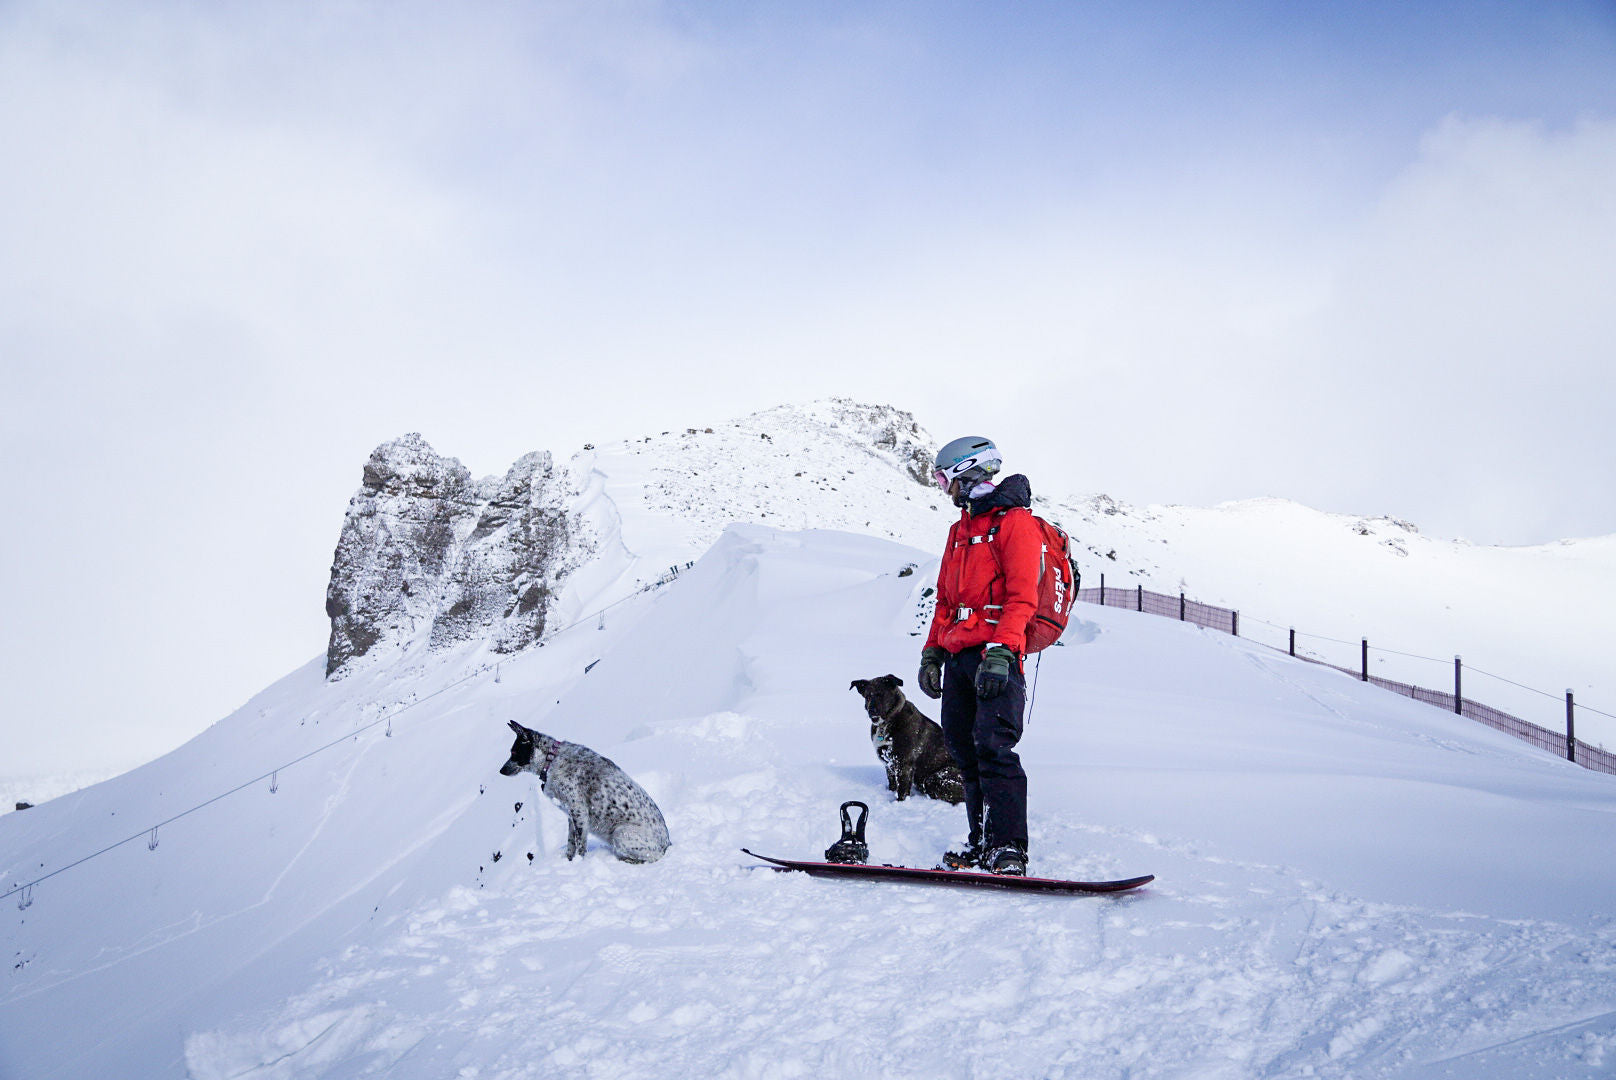 Shredding Through the Snow: The Ultimate Ski & Snowboard Adventure Across the USA!